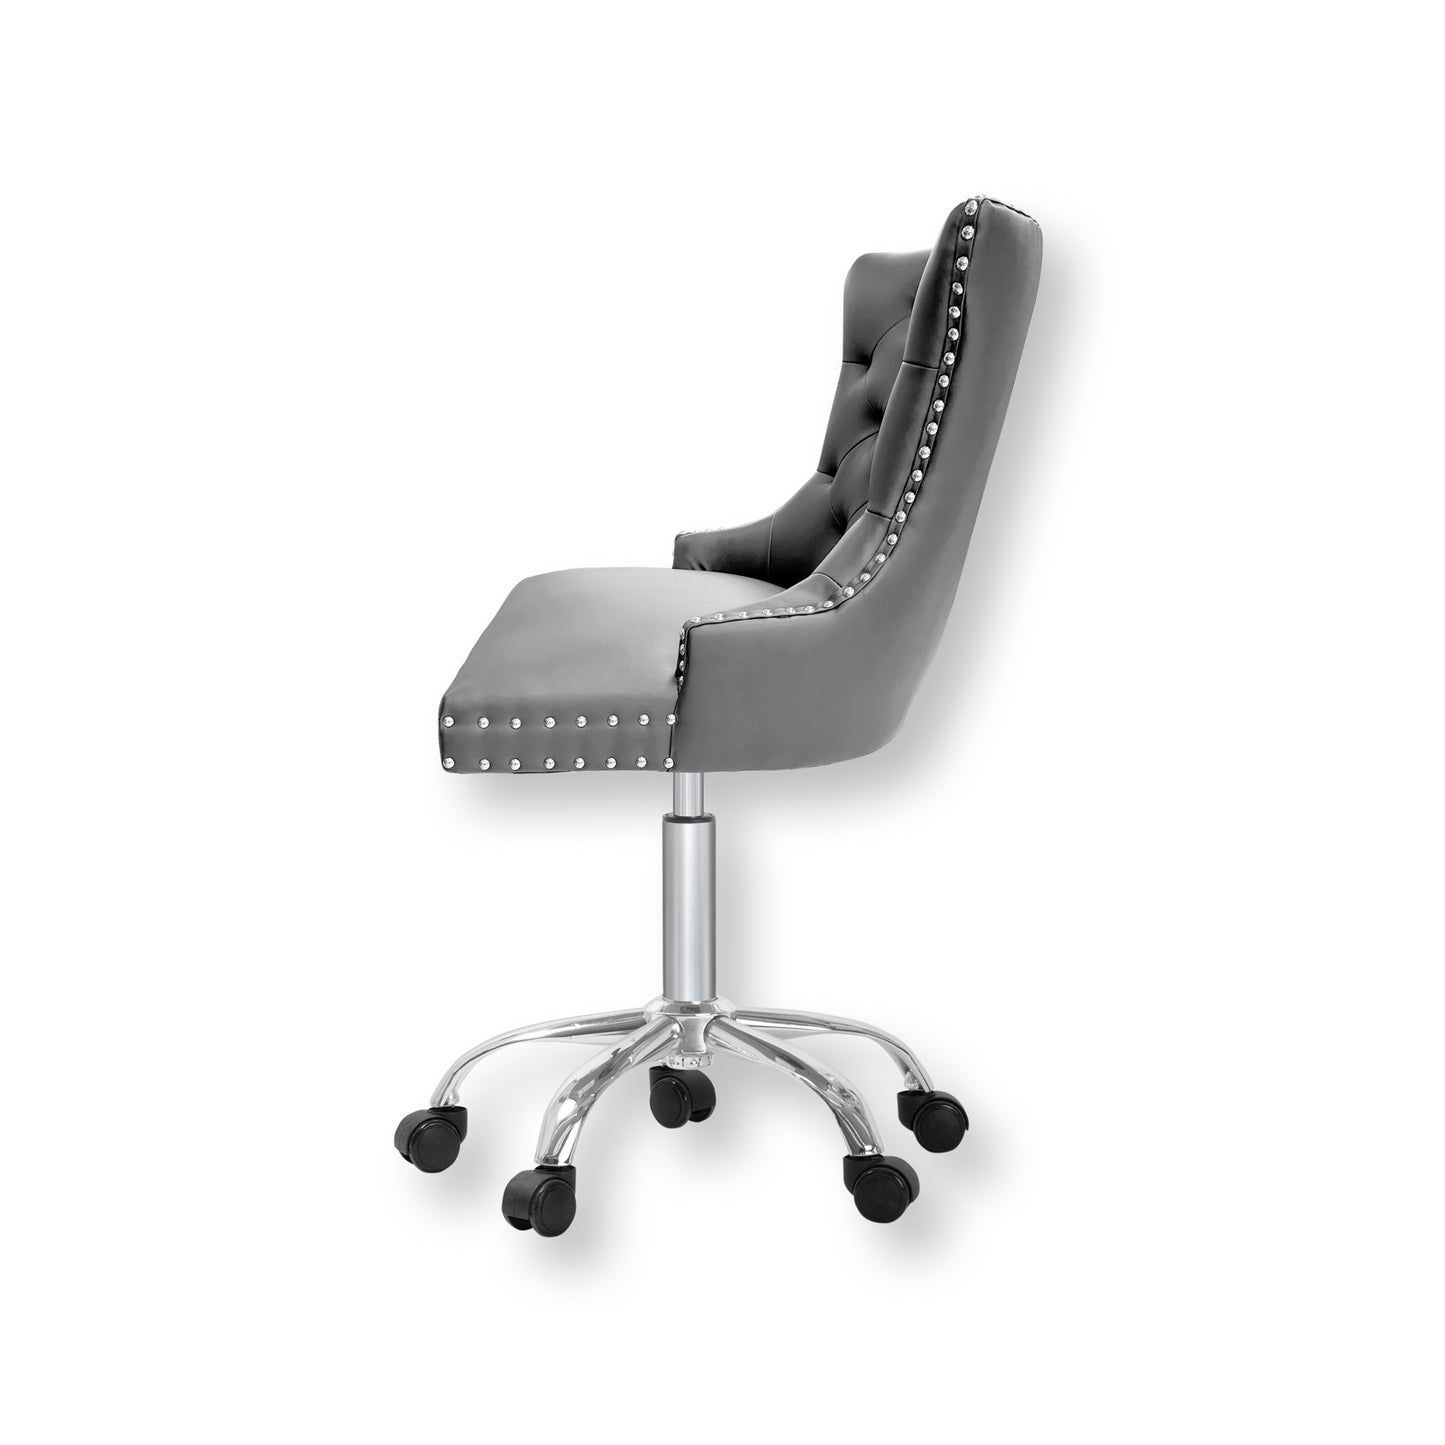 Dark Grey Color Itech Luxury Venice Customer Chair